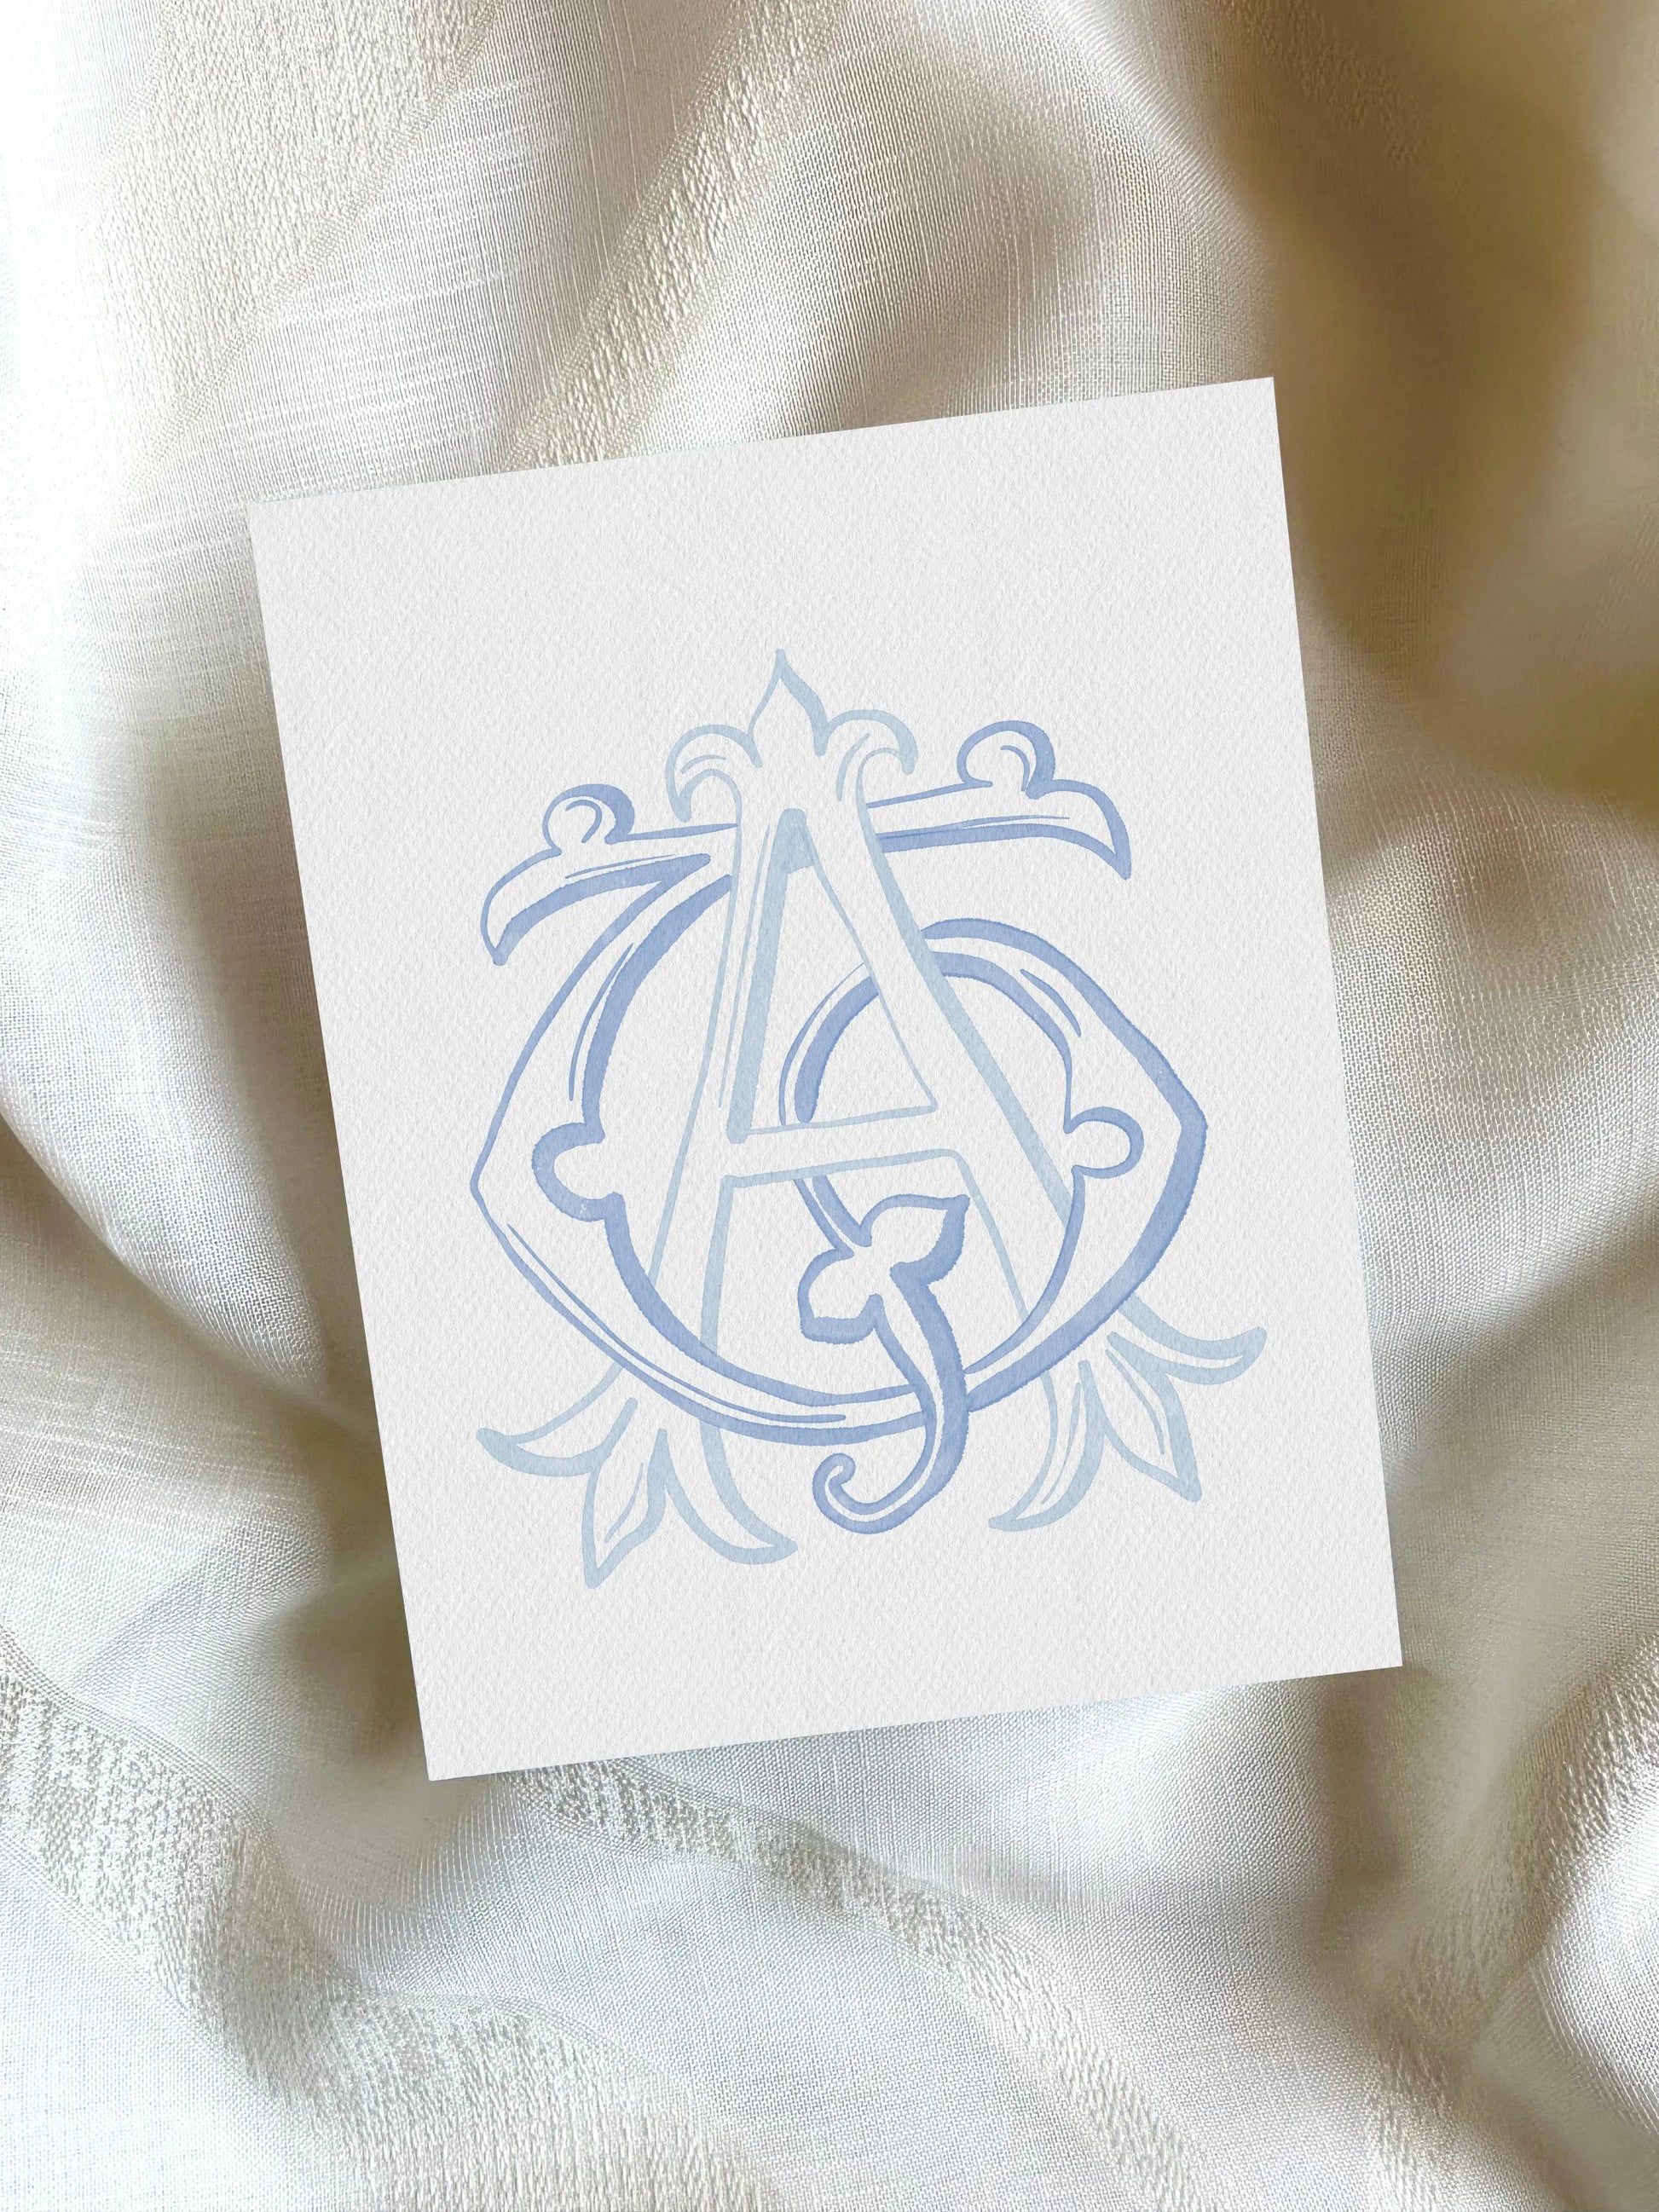 2 Letter Monogram with Letters TA | Digital Download - Wedding Monogram SVG, Personal Logo, Wedding Logo for Wedding Invitations The Wedding Crest Lab